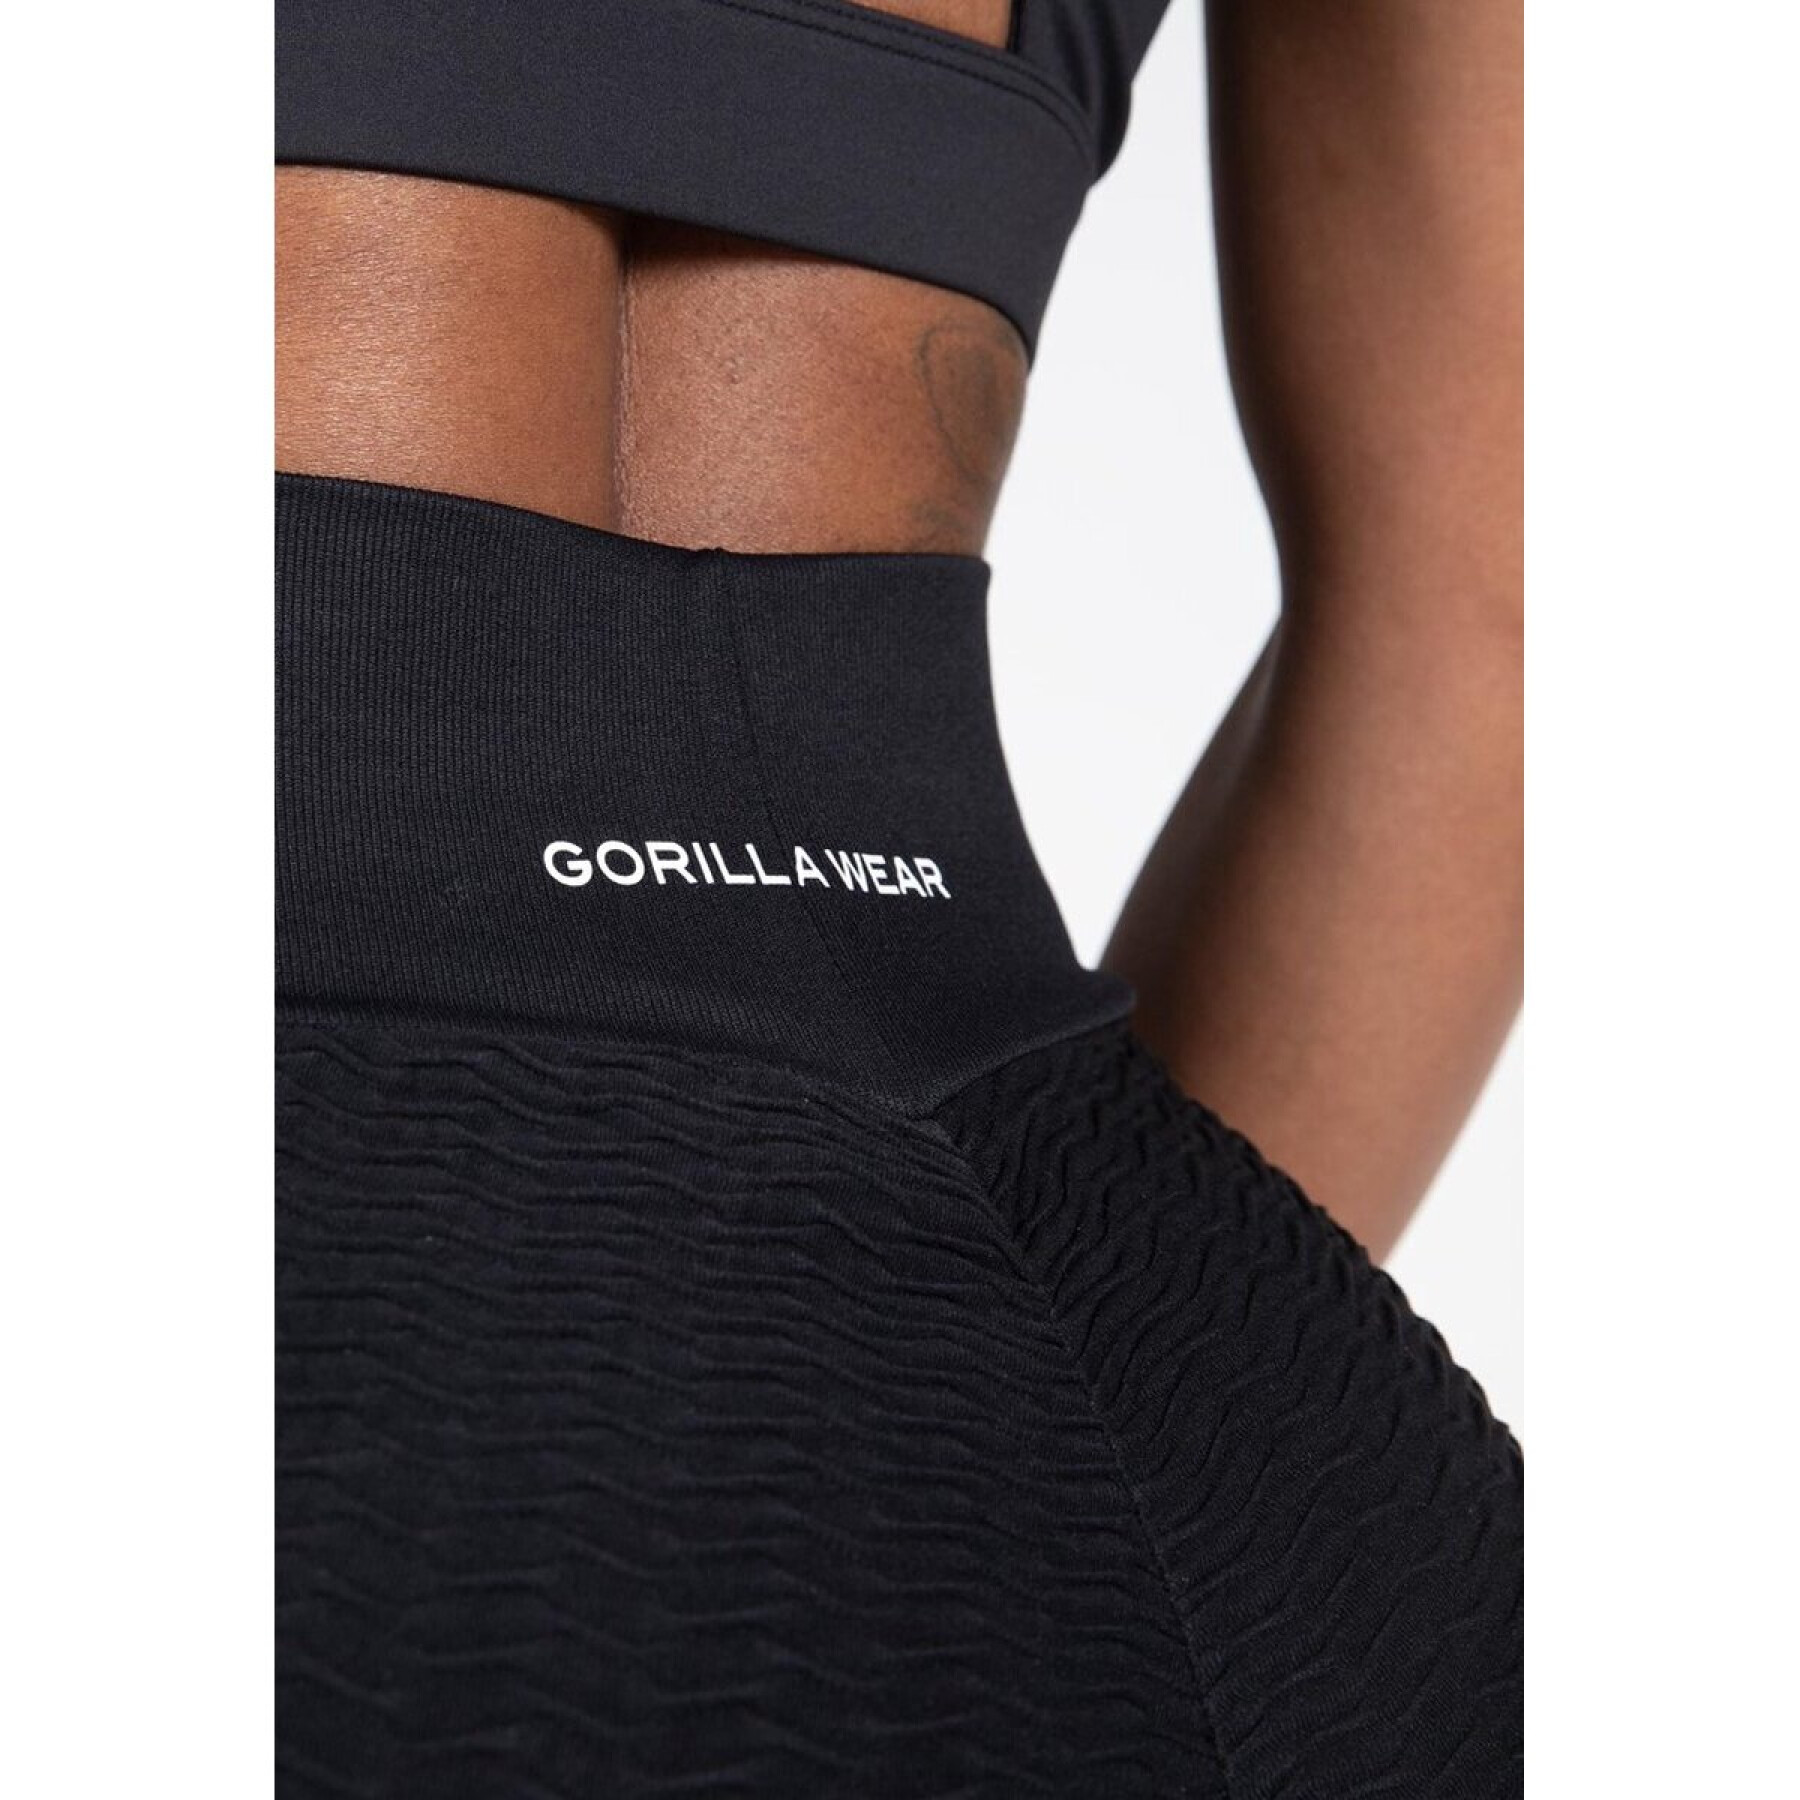 Women's leggings Gorilla Wear Dorris